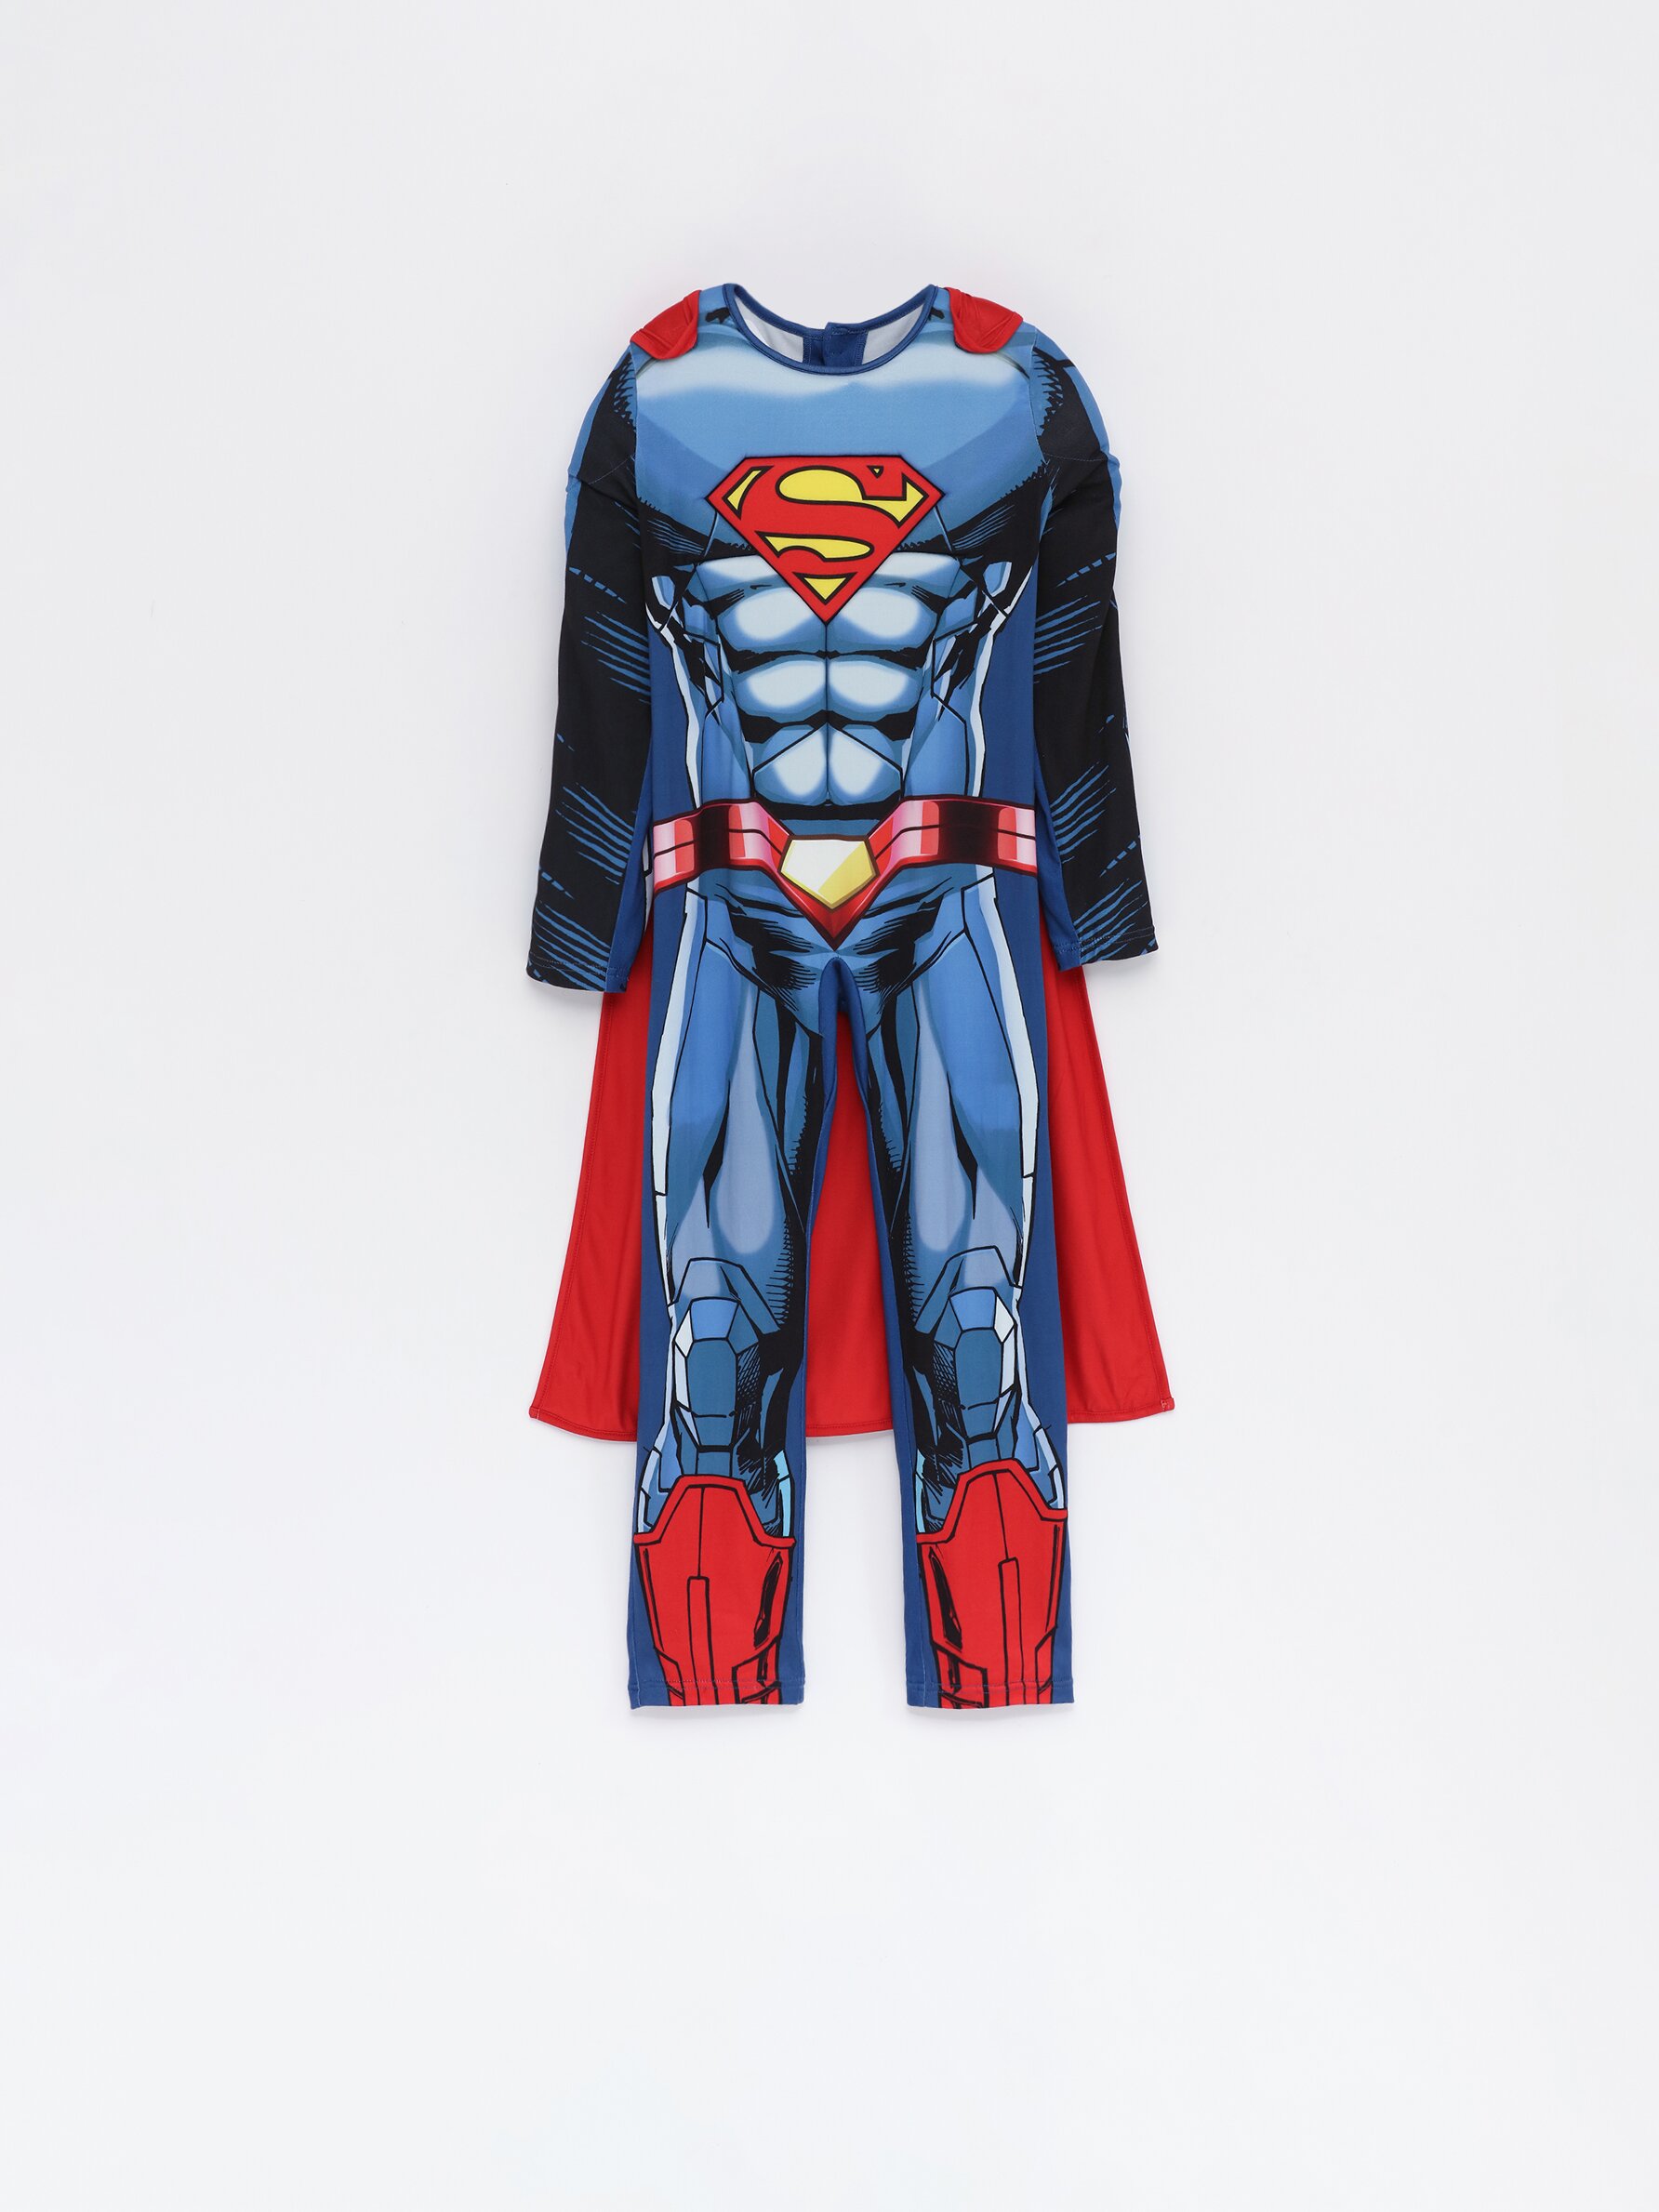 Adult, Kid, Toddler Superman Costumes